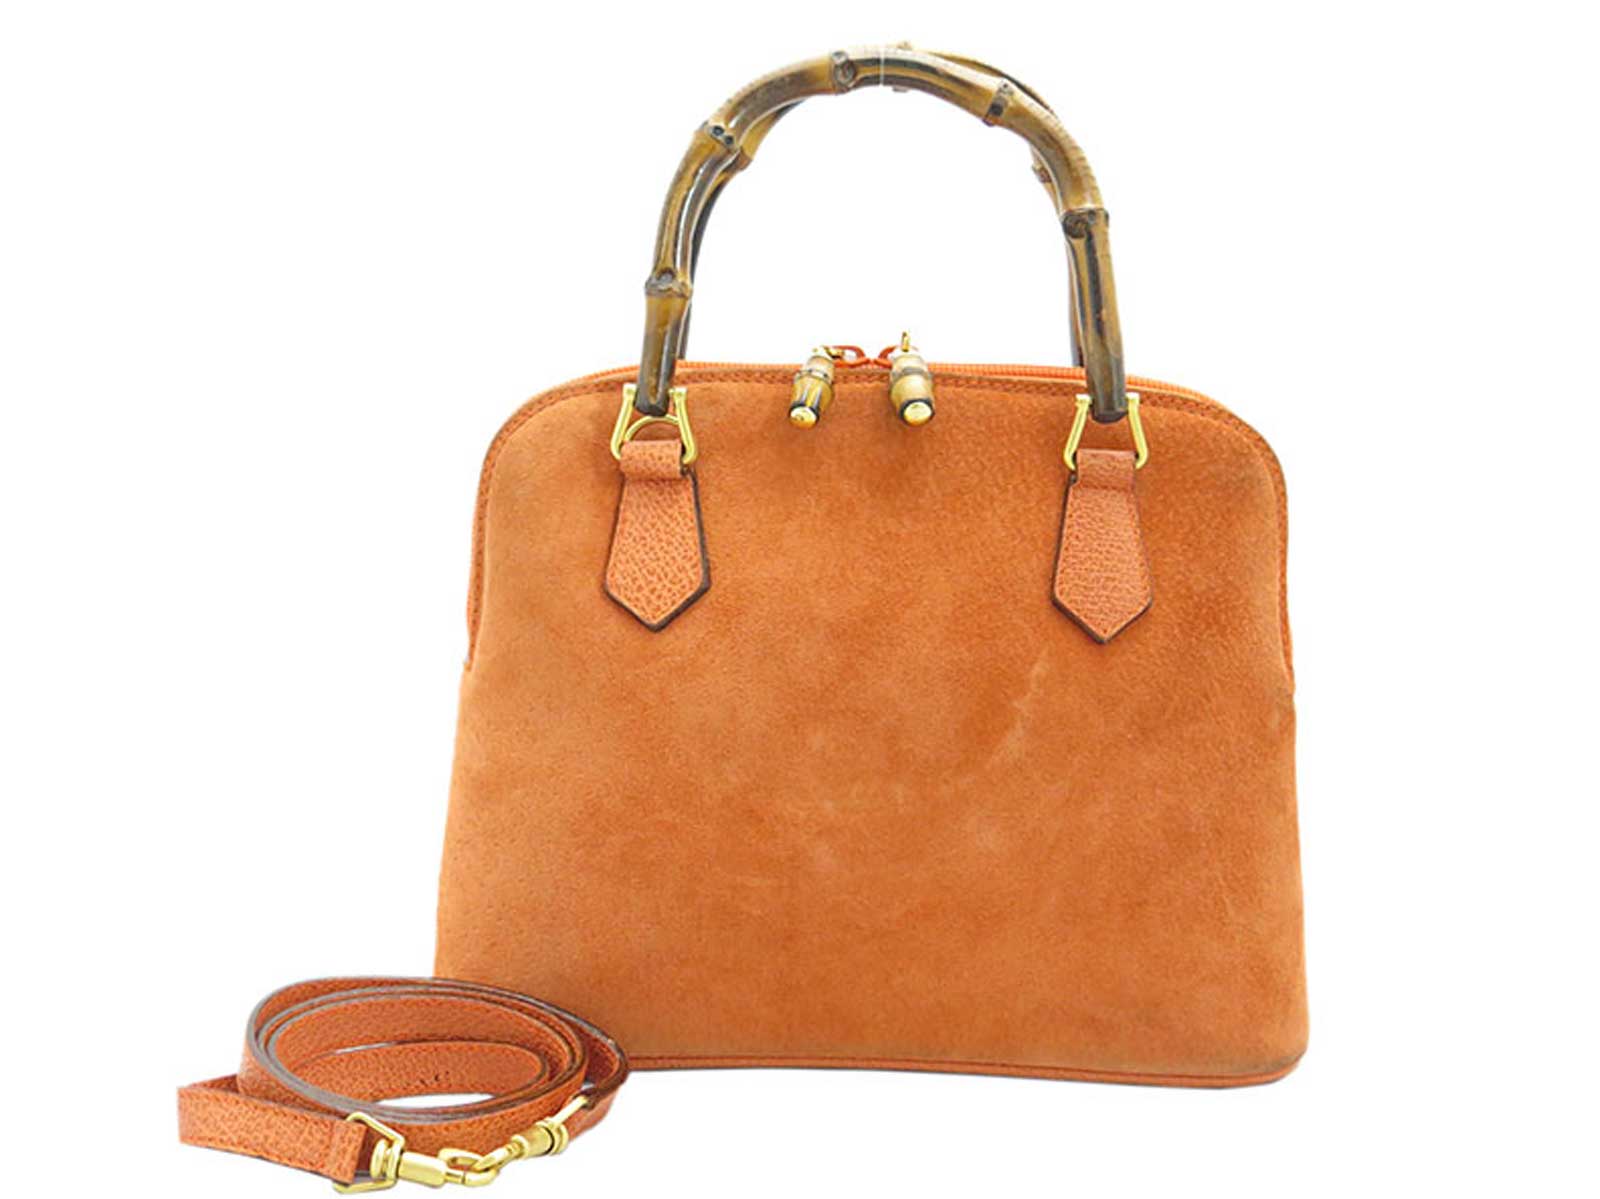 Auth GUCCI Bamboo 2-way Handbag Shoulder Bag Orange Suede/Leather Gold - e11344 | eBay